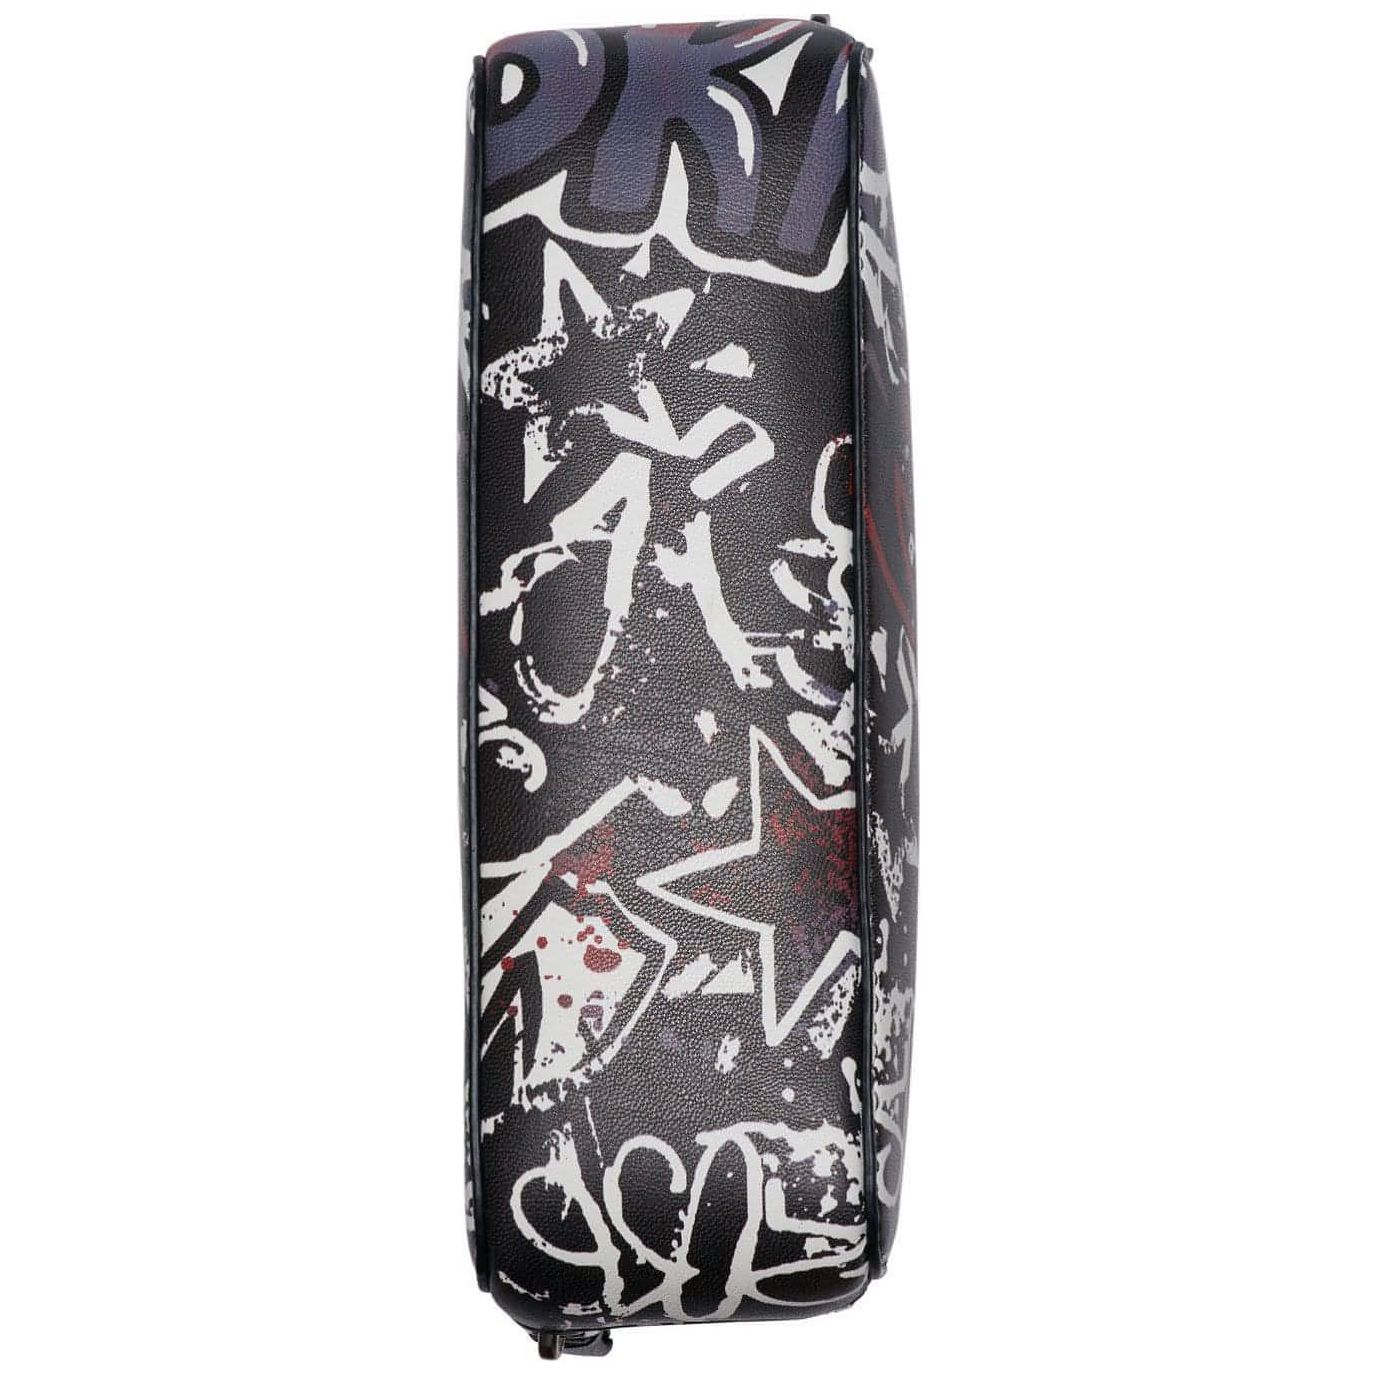 DKNY Tilly Mini Dome Graffiti Crossbody - Brandat Outlet, Women's Handbags Outlet ,Handbags Online Outlet | Brands Outlet | Brandat Outlet | Designer Handbags Online |